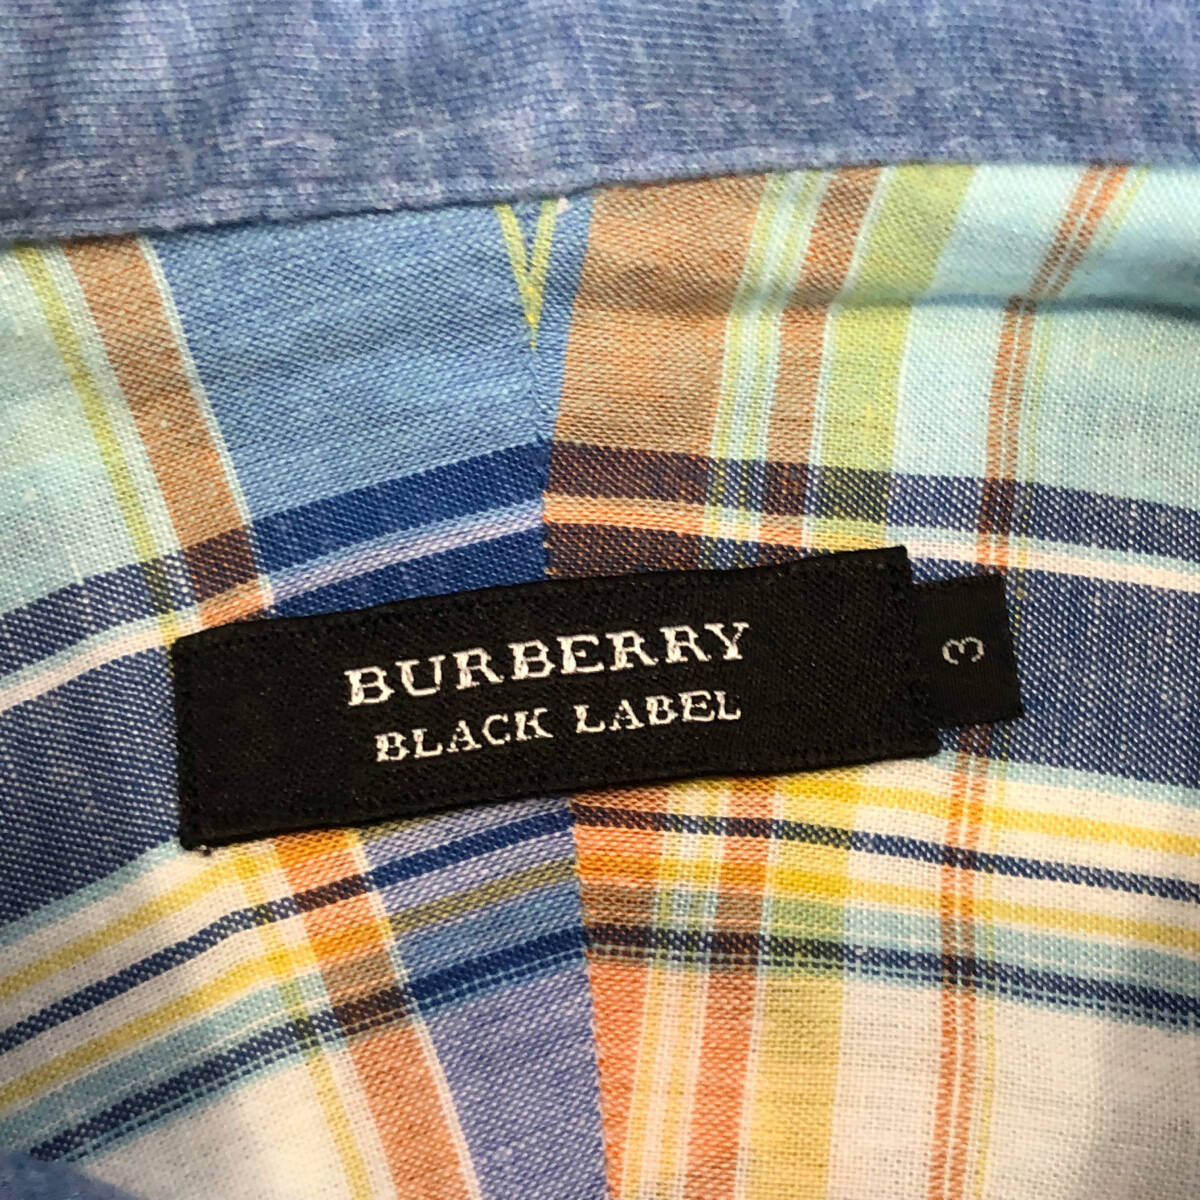 BURBERRY BLACK LABEL バーバリーブラックレーベル チェック シャツ 七分袖 3 青 水色 コットン リネン メンズ A15_画像7